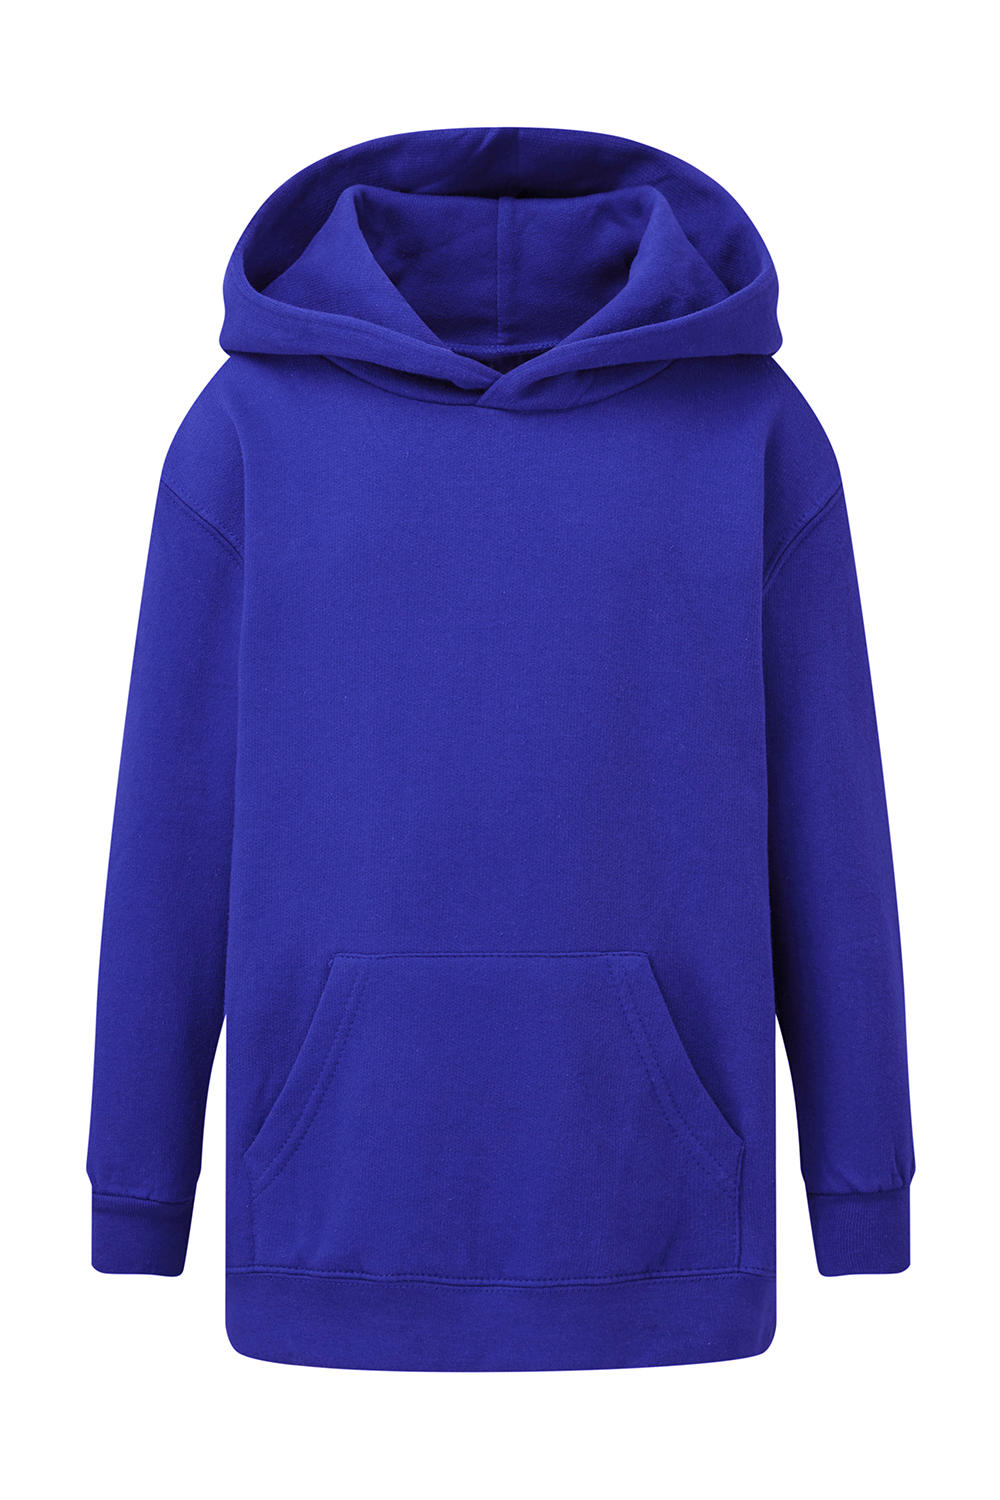  Kids Hooded Sweatshirt in Farbe Royal Blue